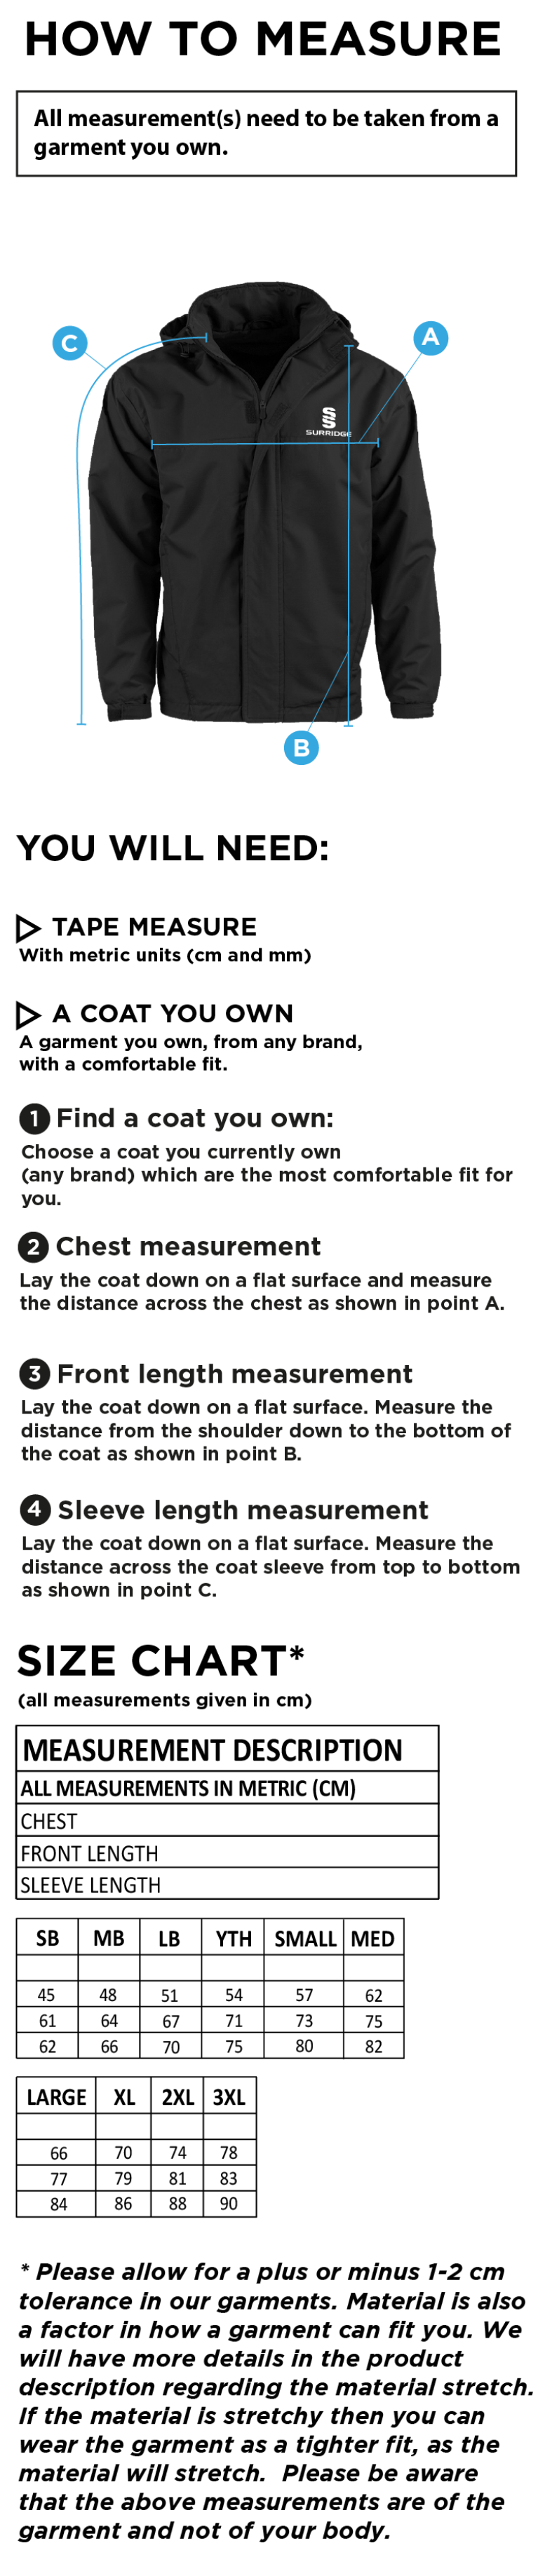 Bentley CC - Dual Fleece Lined Jacket - Size Guide